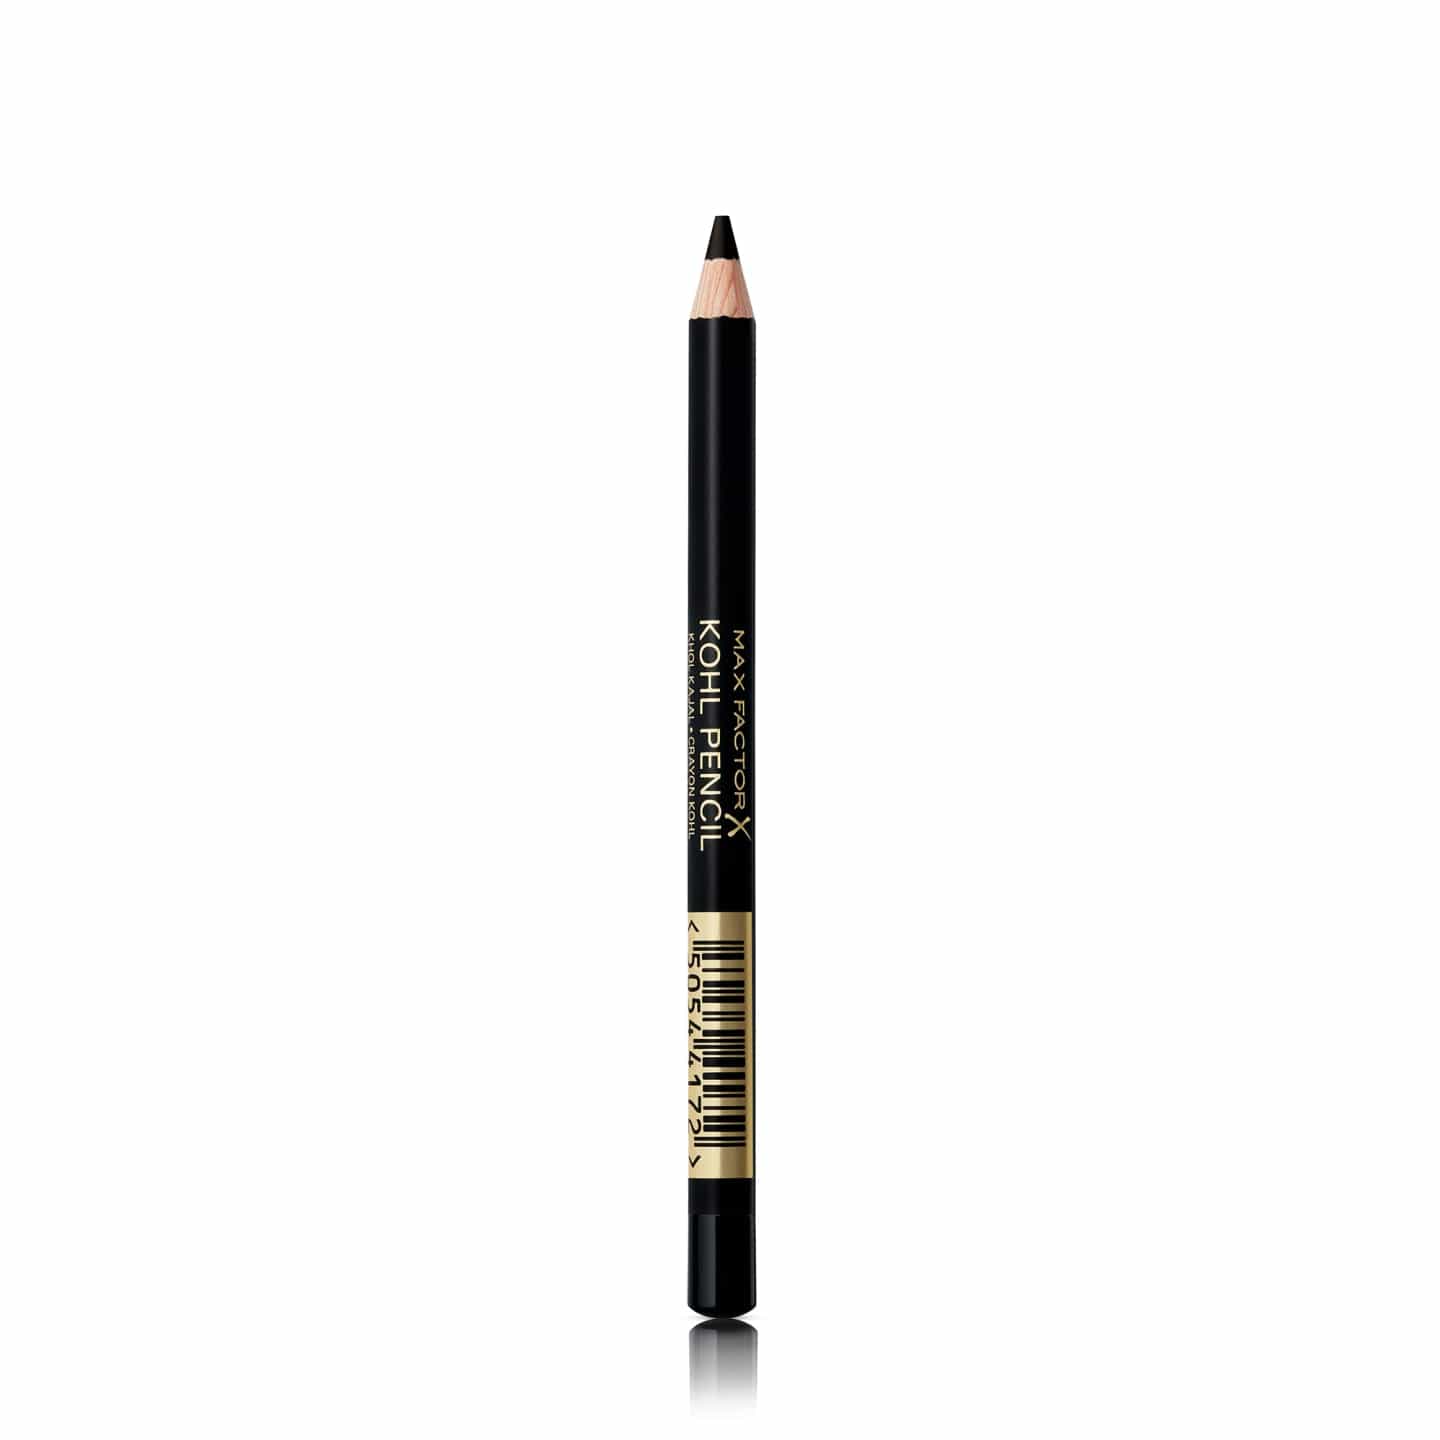 Max Factor Kohl Eye Pencil - Give Us Beauty